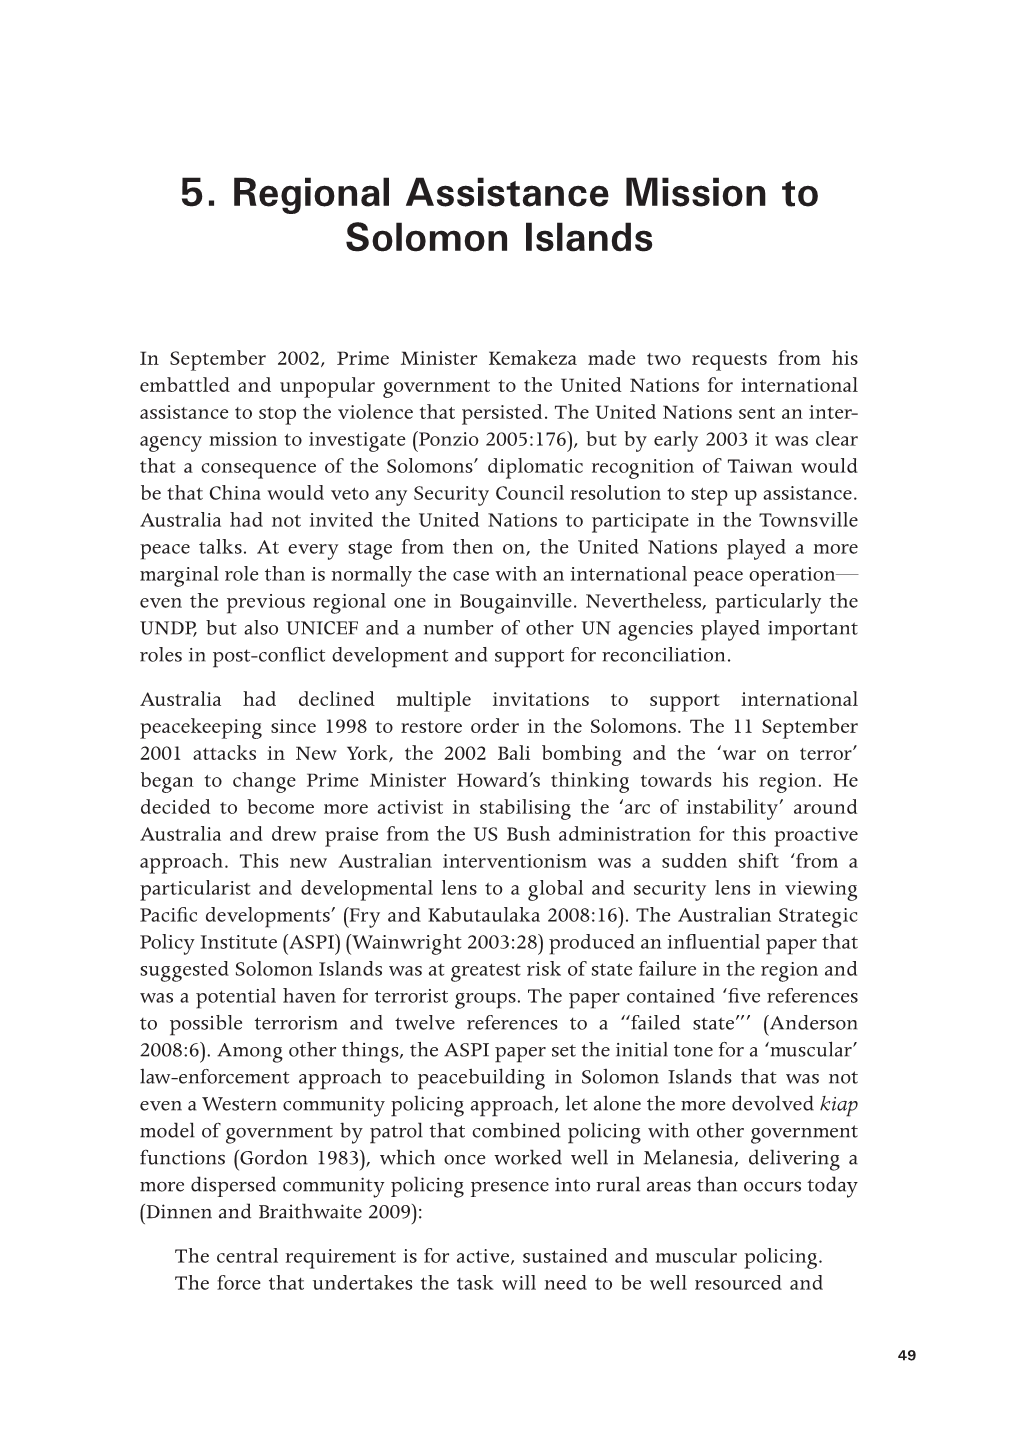 5. Regional Assistance Mission to Solomon Islands